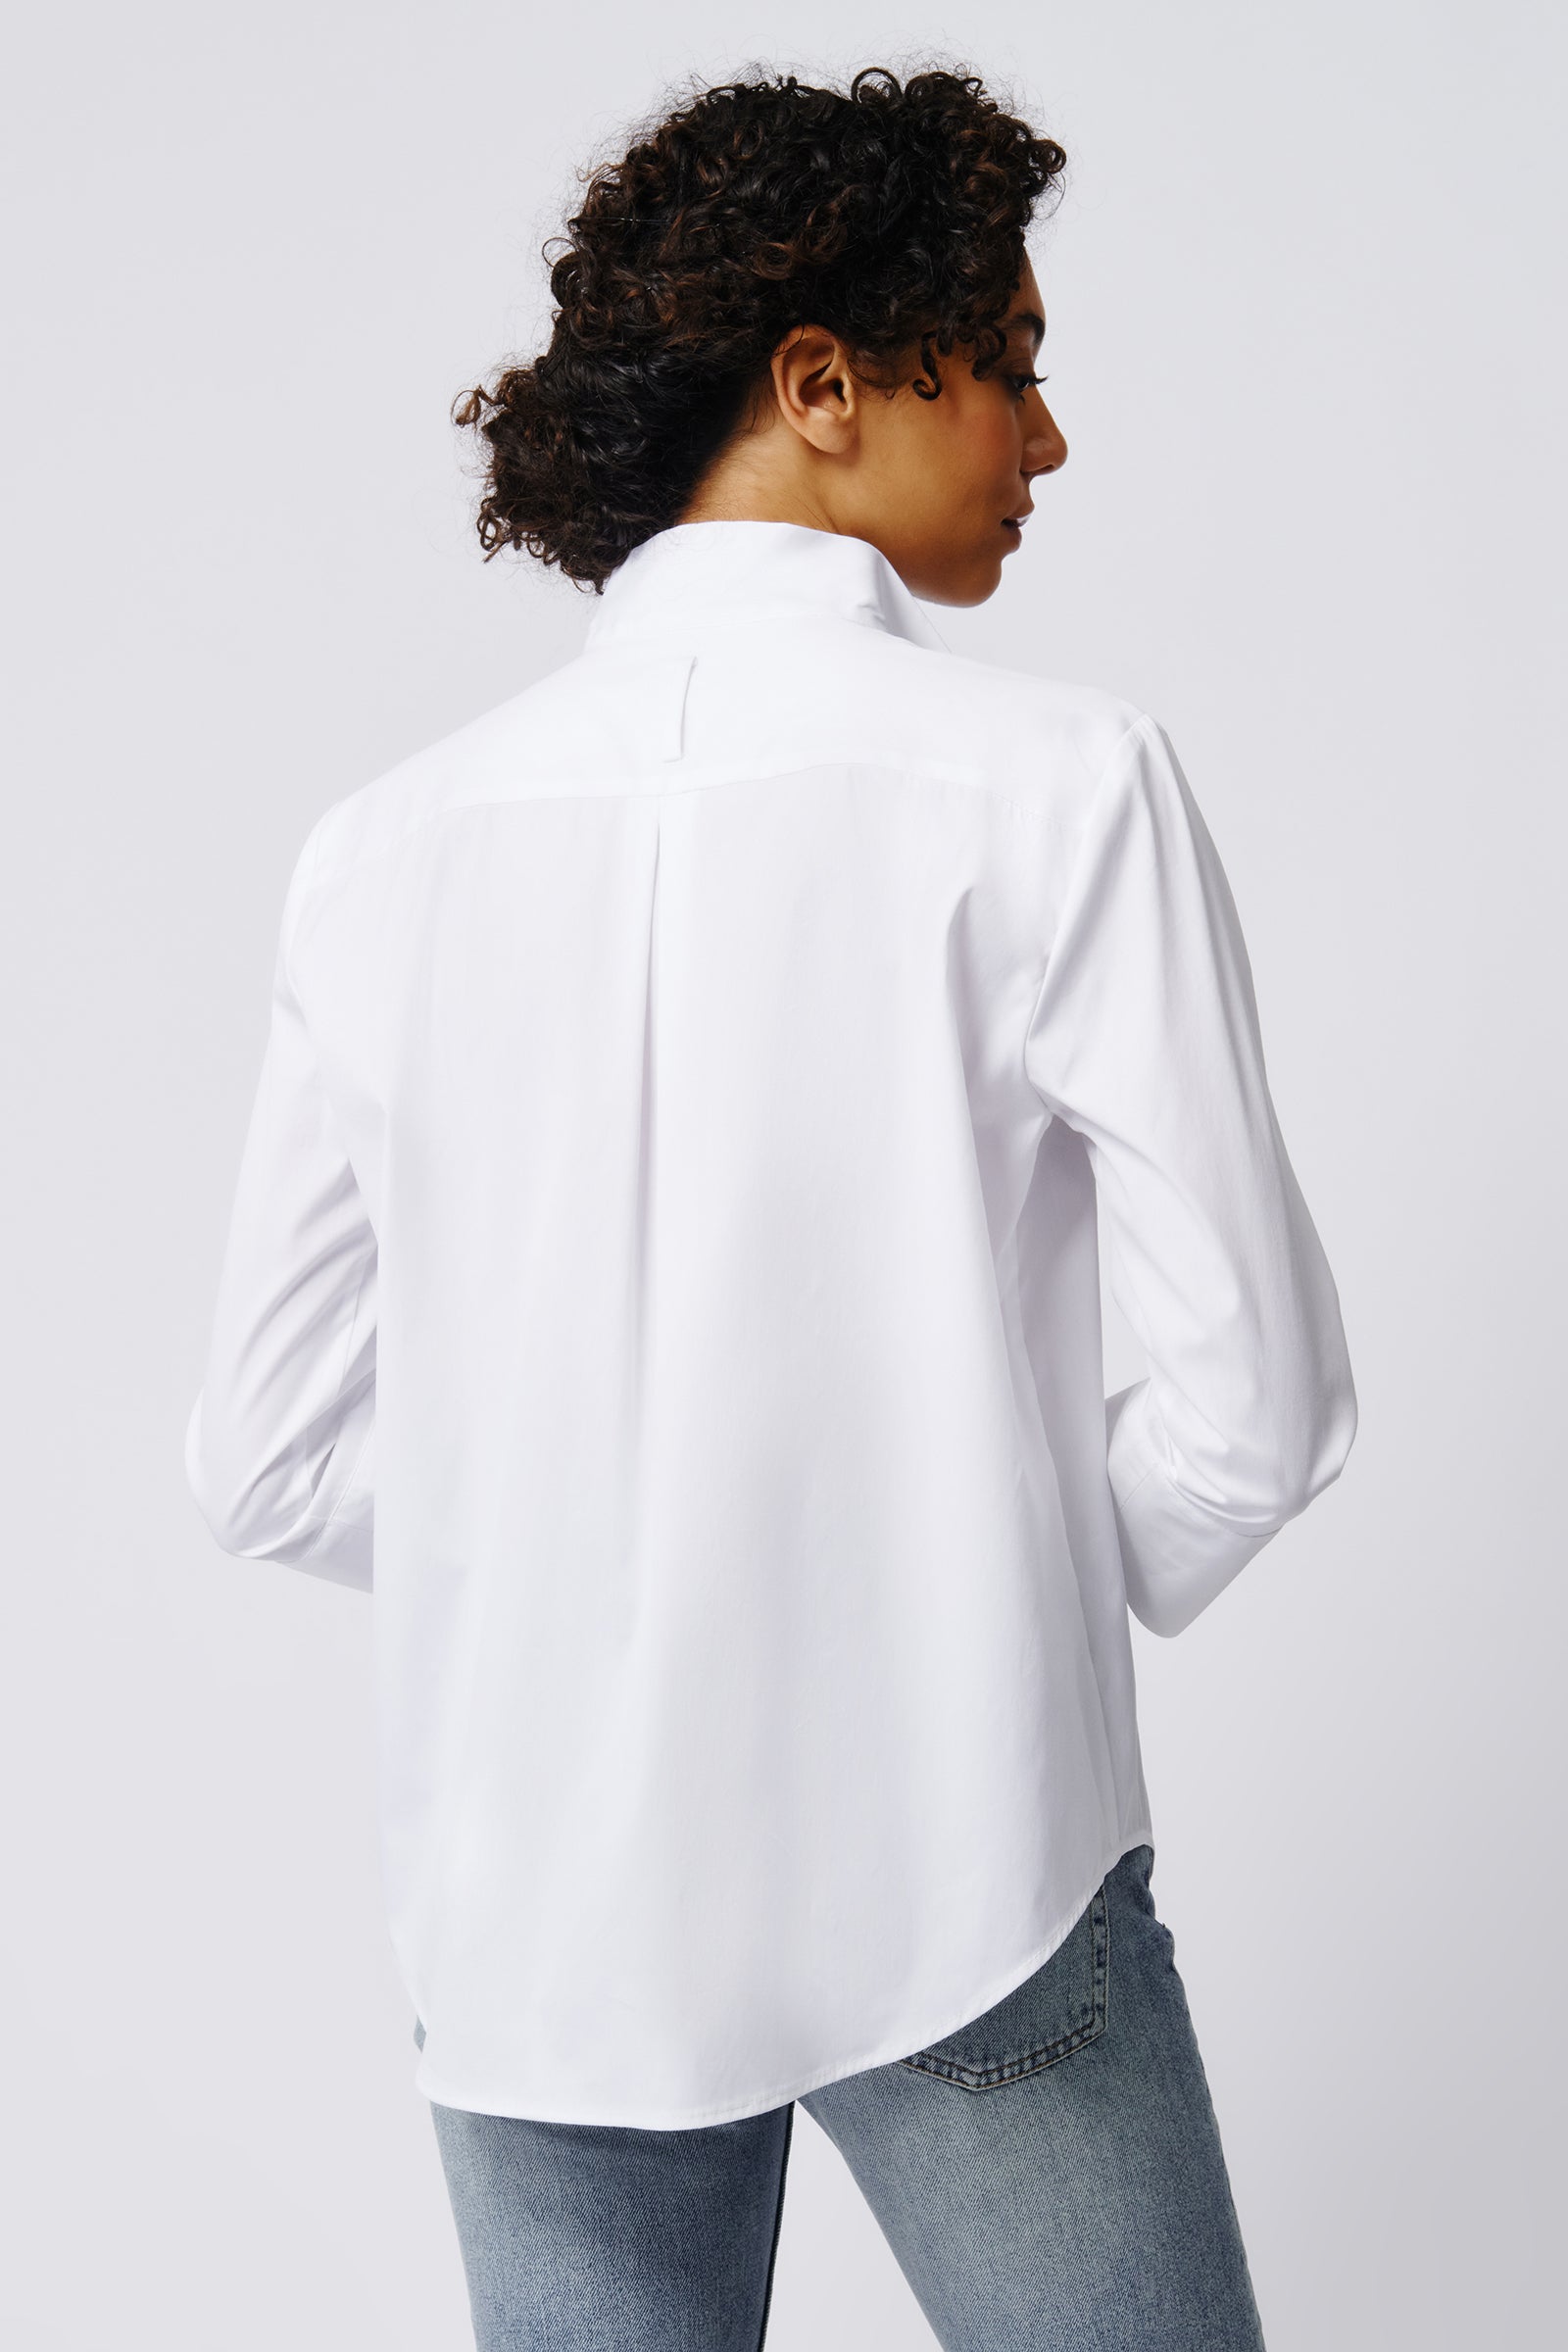 Kal Rieman Greta Placket Front Shirt in White Poplin on Model Back View Crop 2